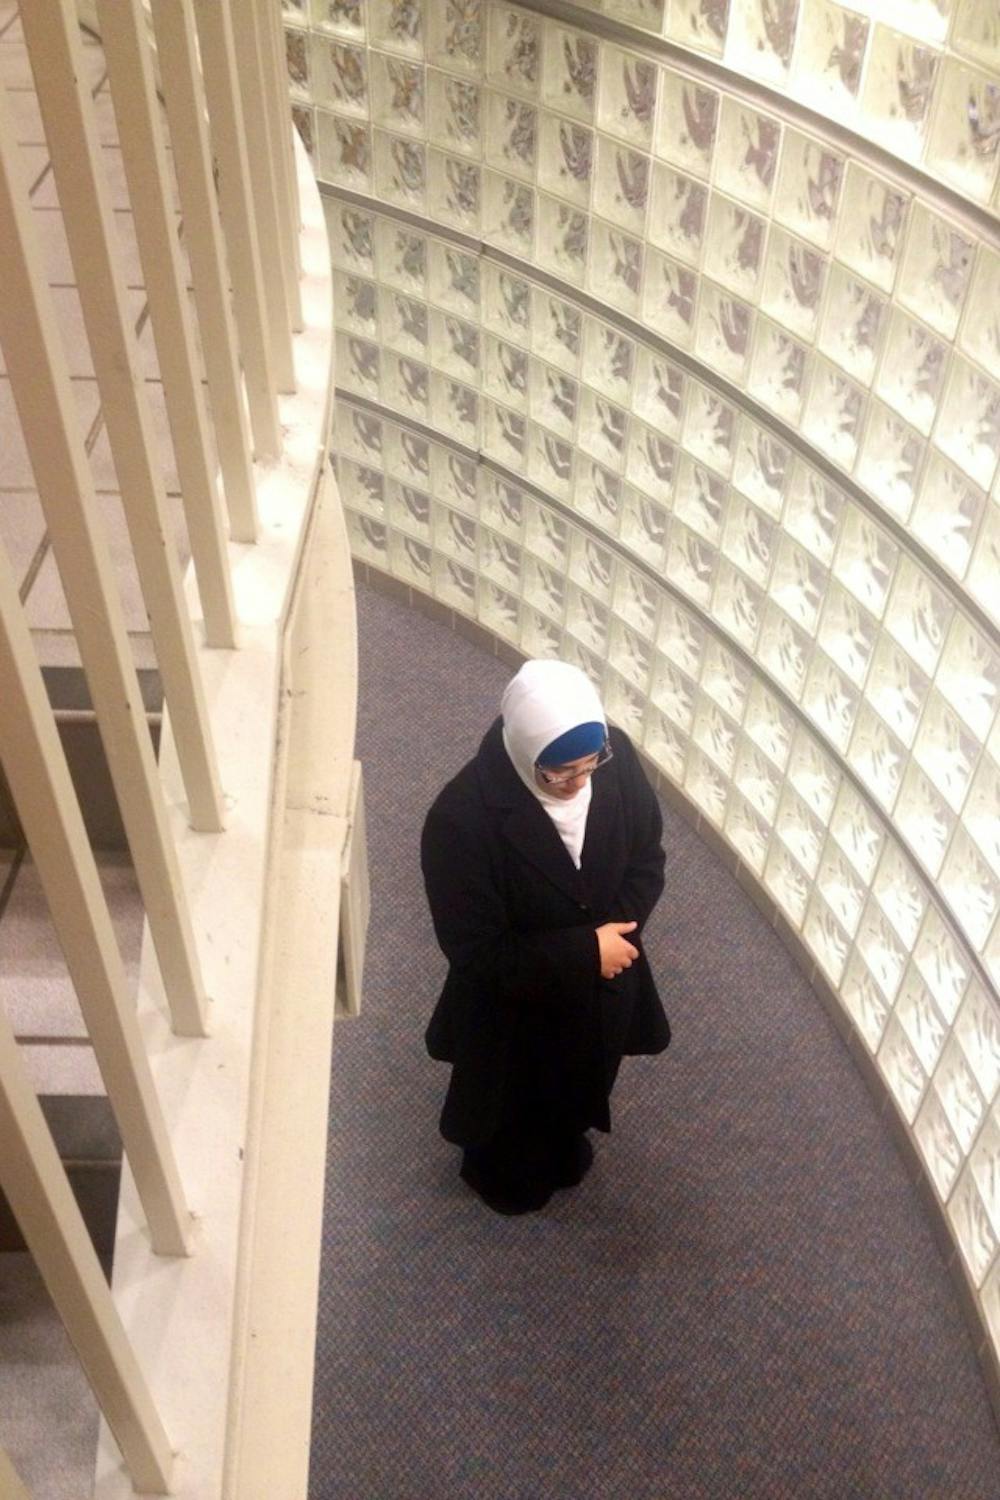 Muslim students need prayer space on EMU campus